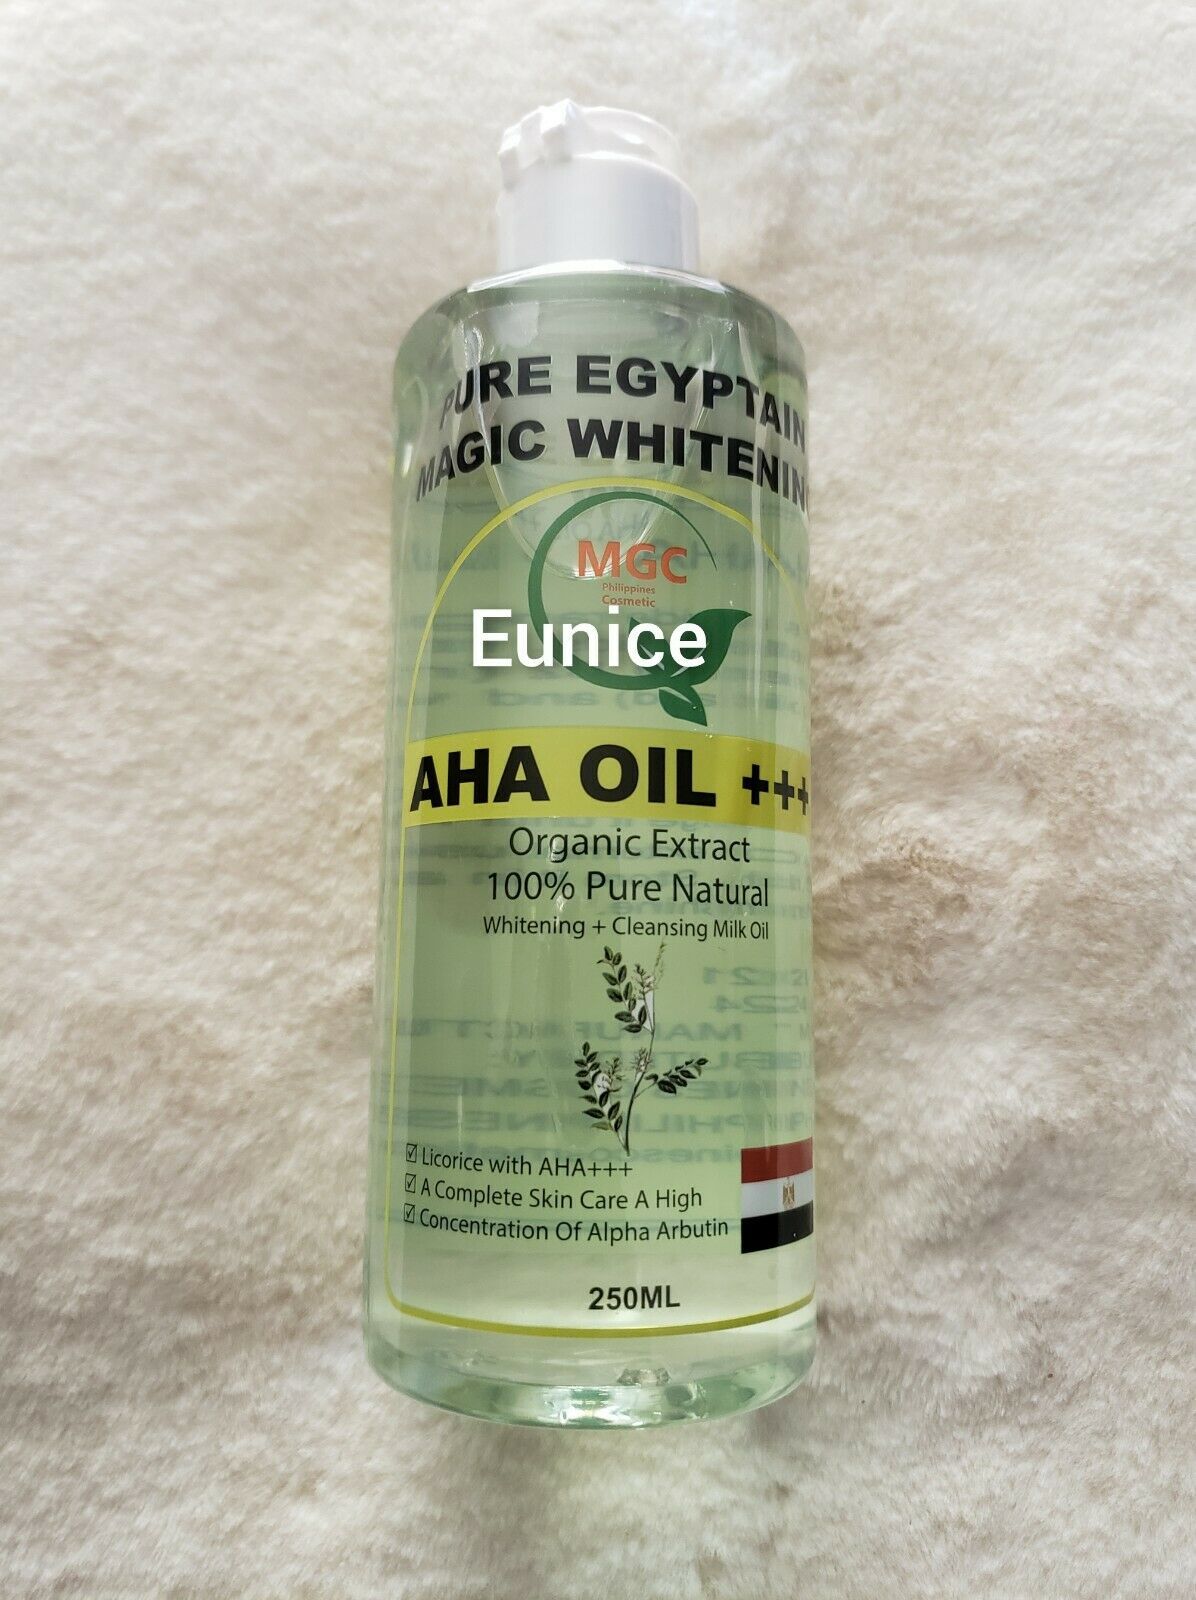 pure egyptian magic whitening / cleansing organic extract aha milk oil.250ml - $32.00